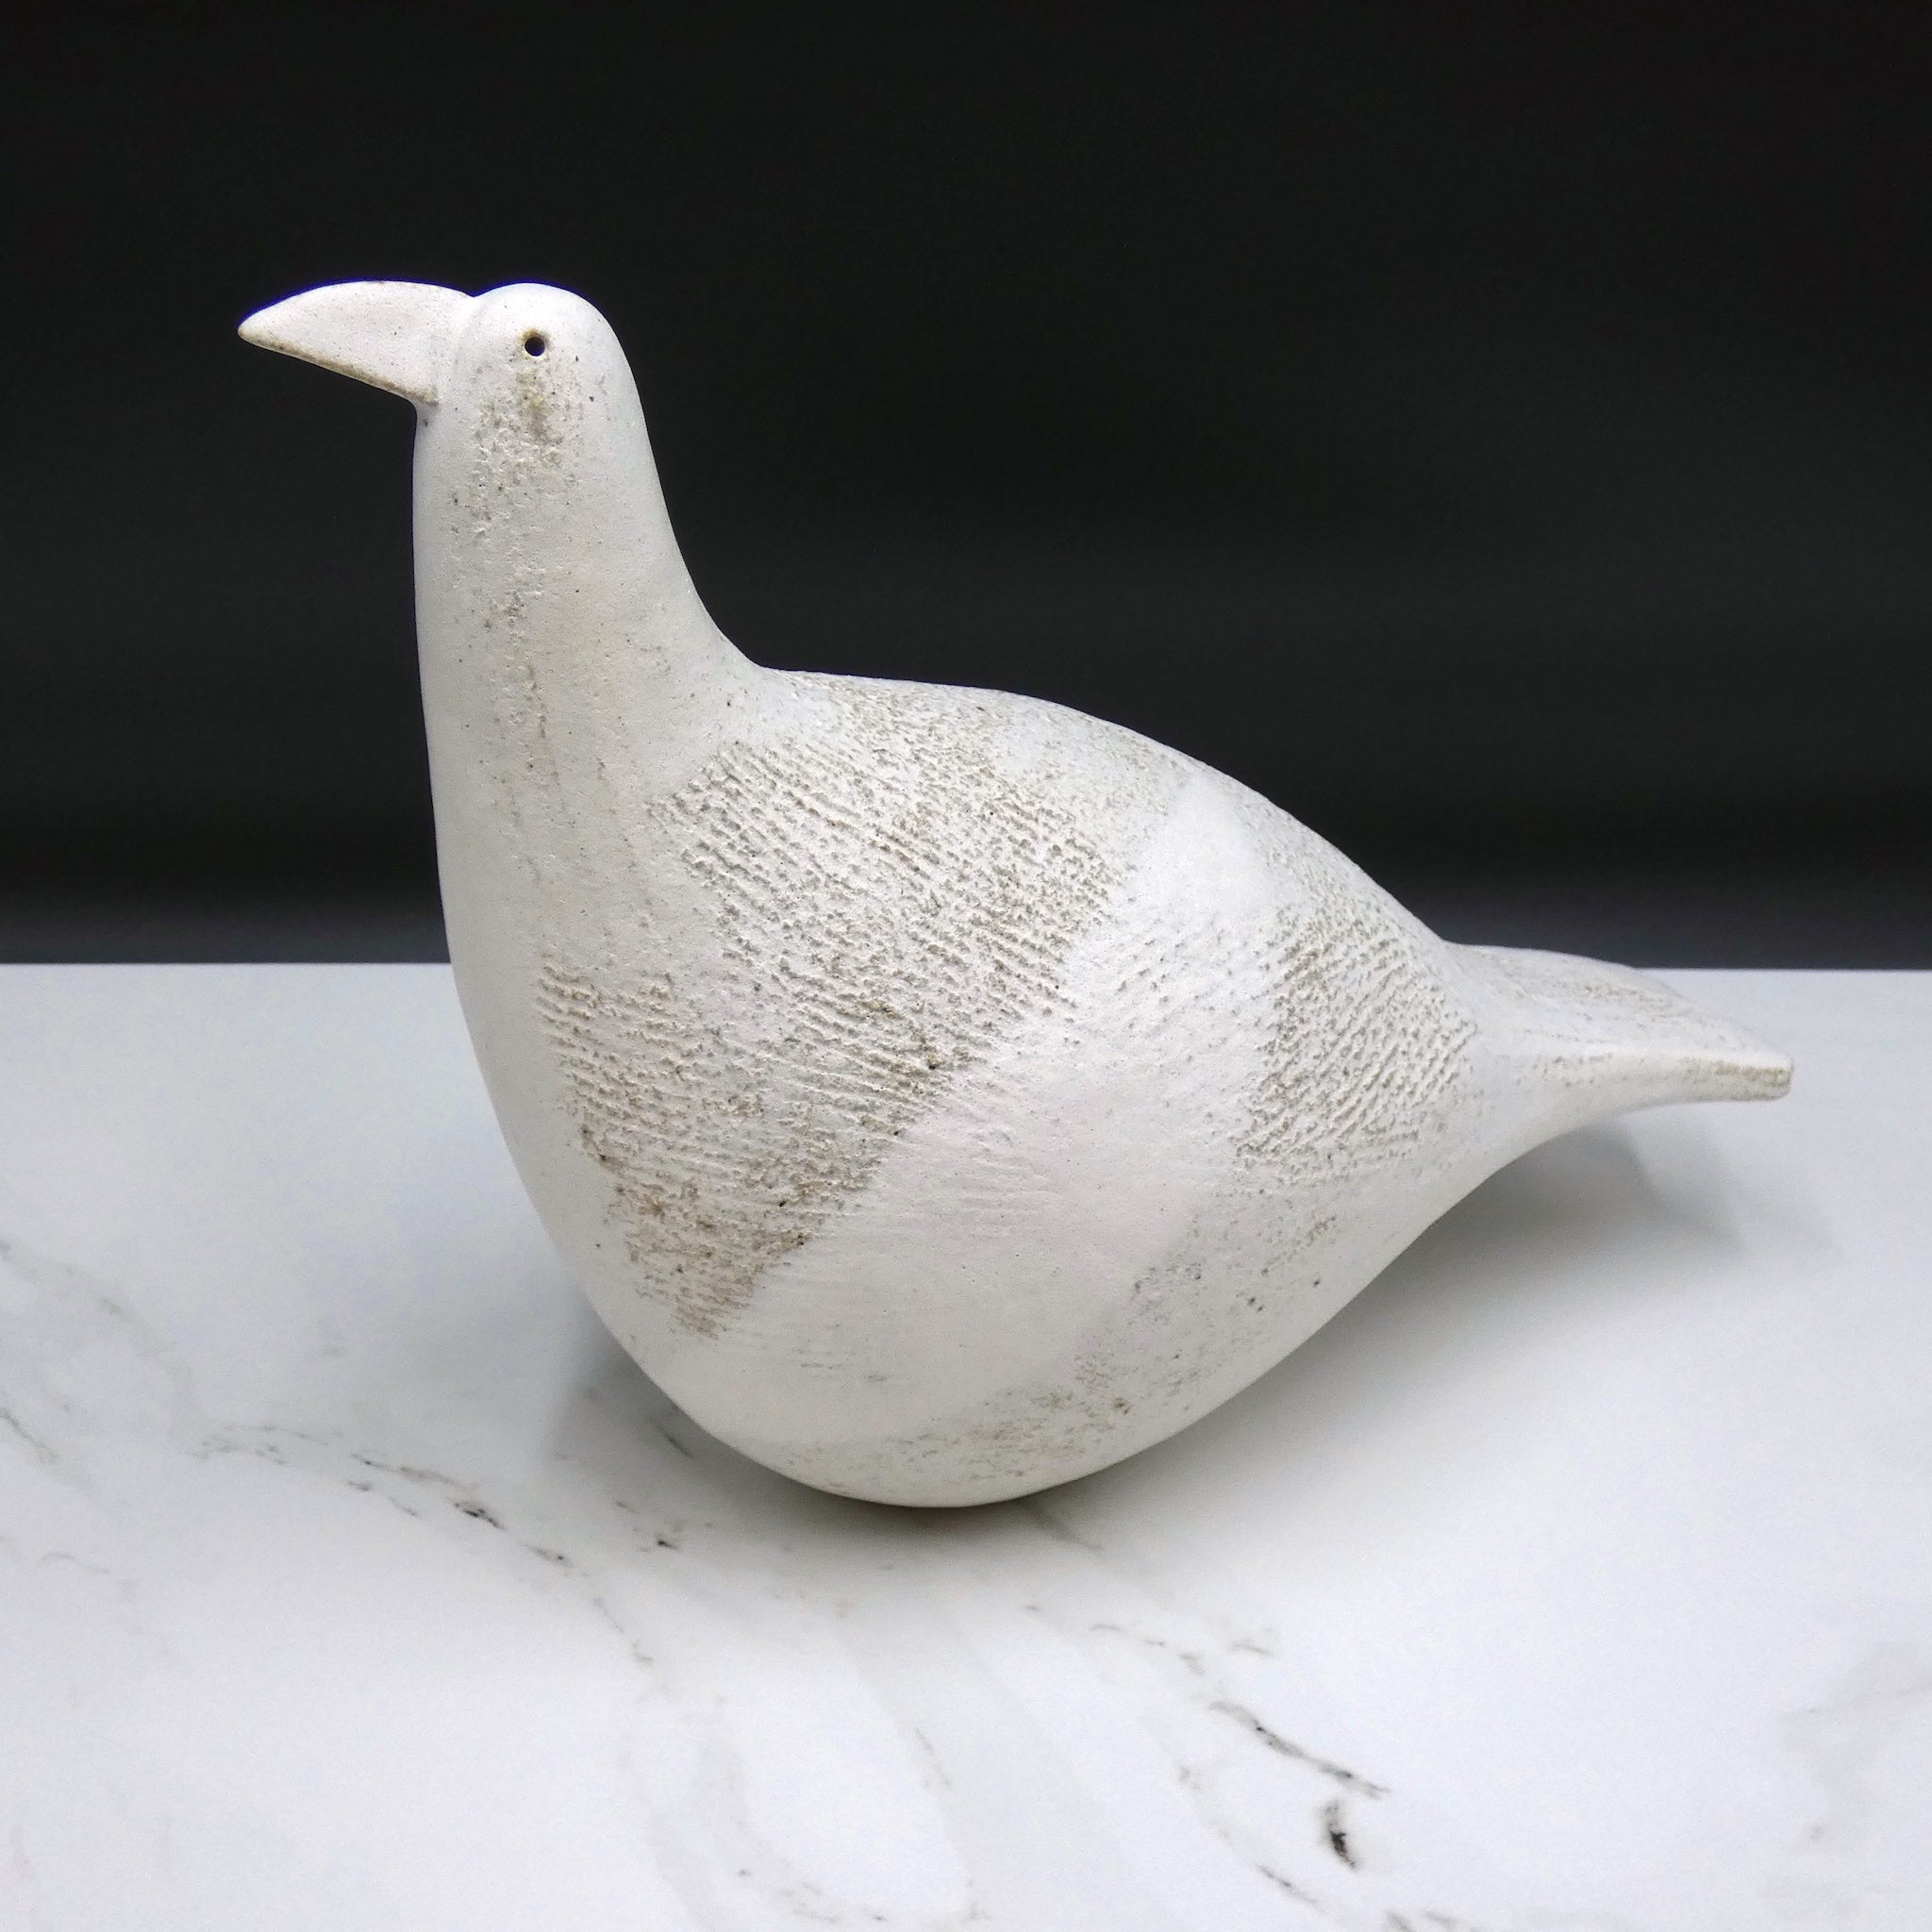 Large Snow Bird by artist Jane Muir